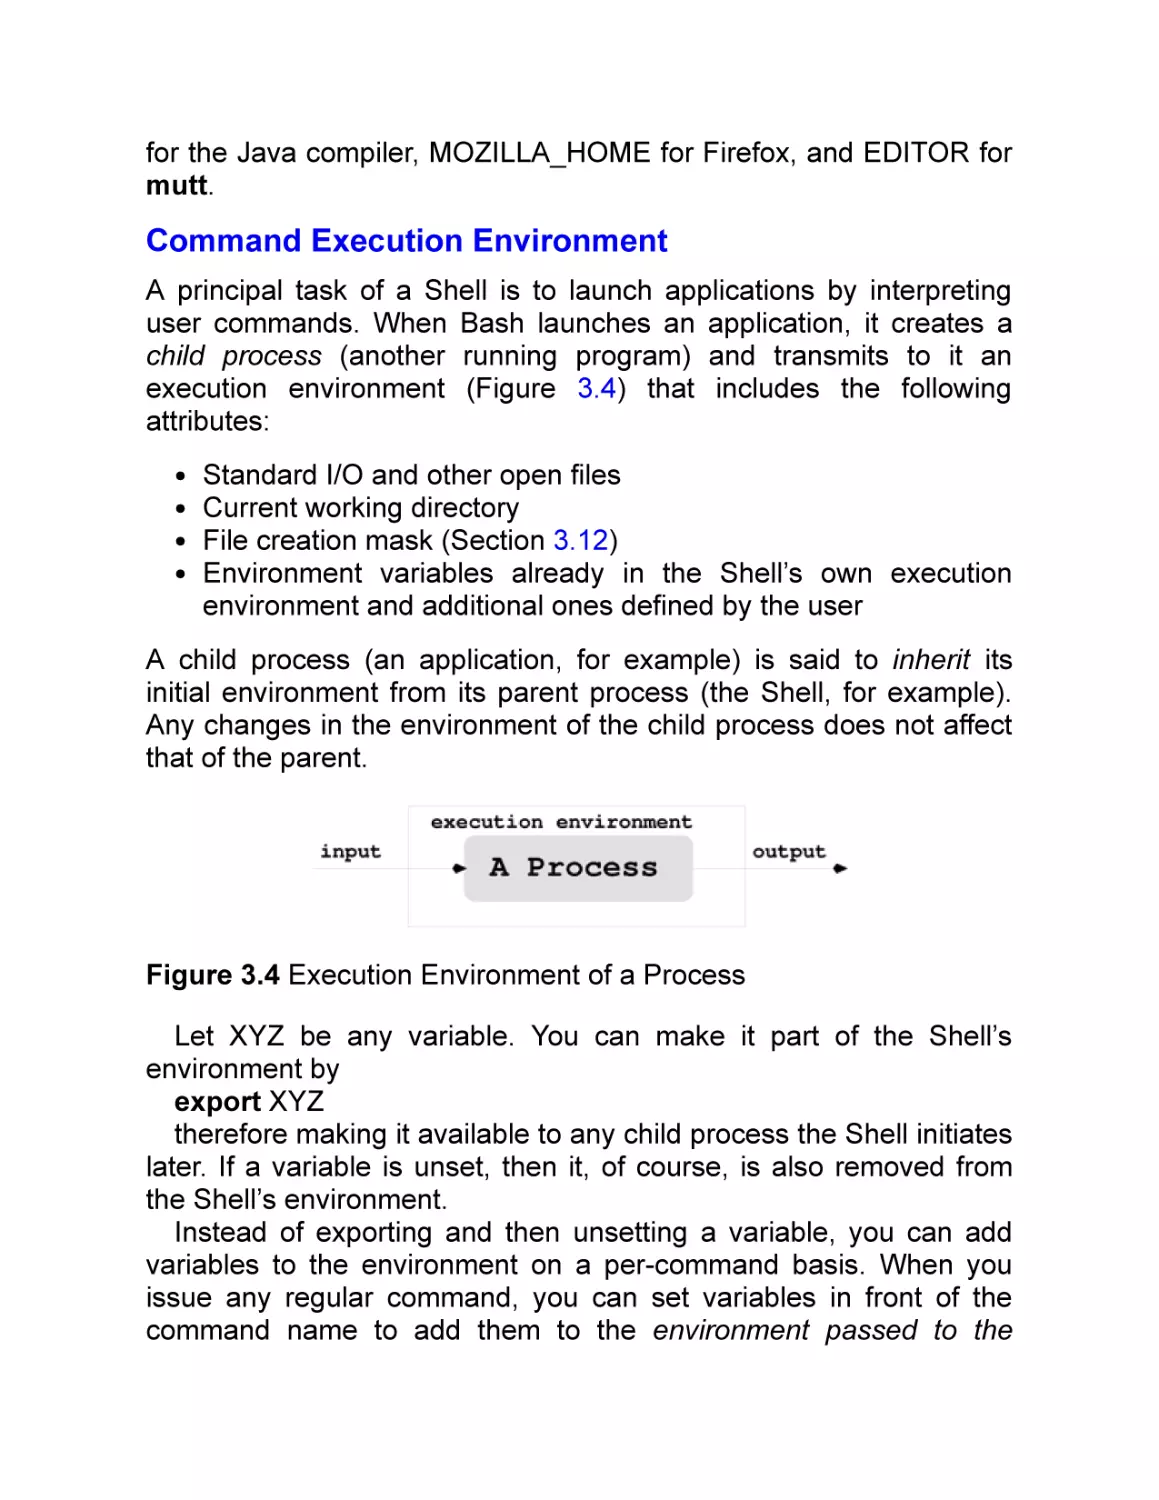 Command Execution Environment